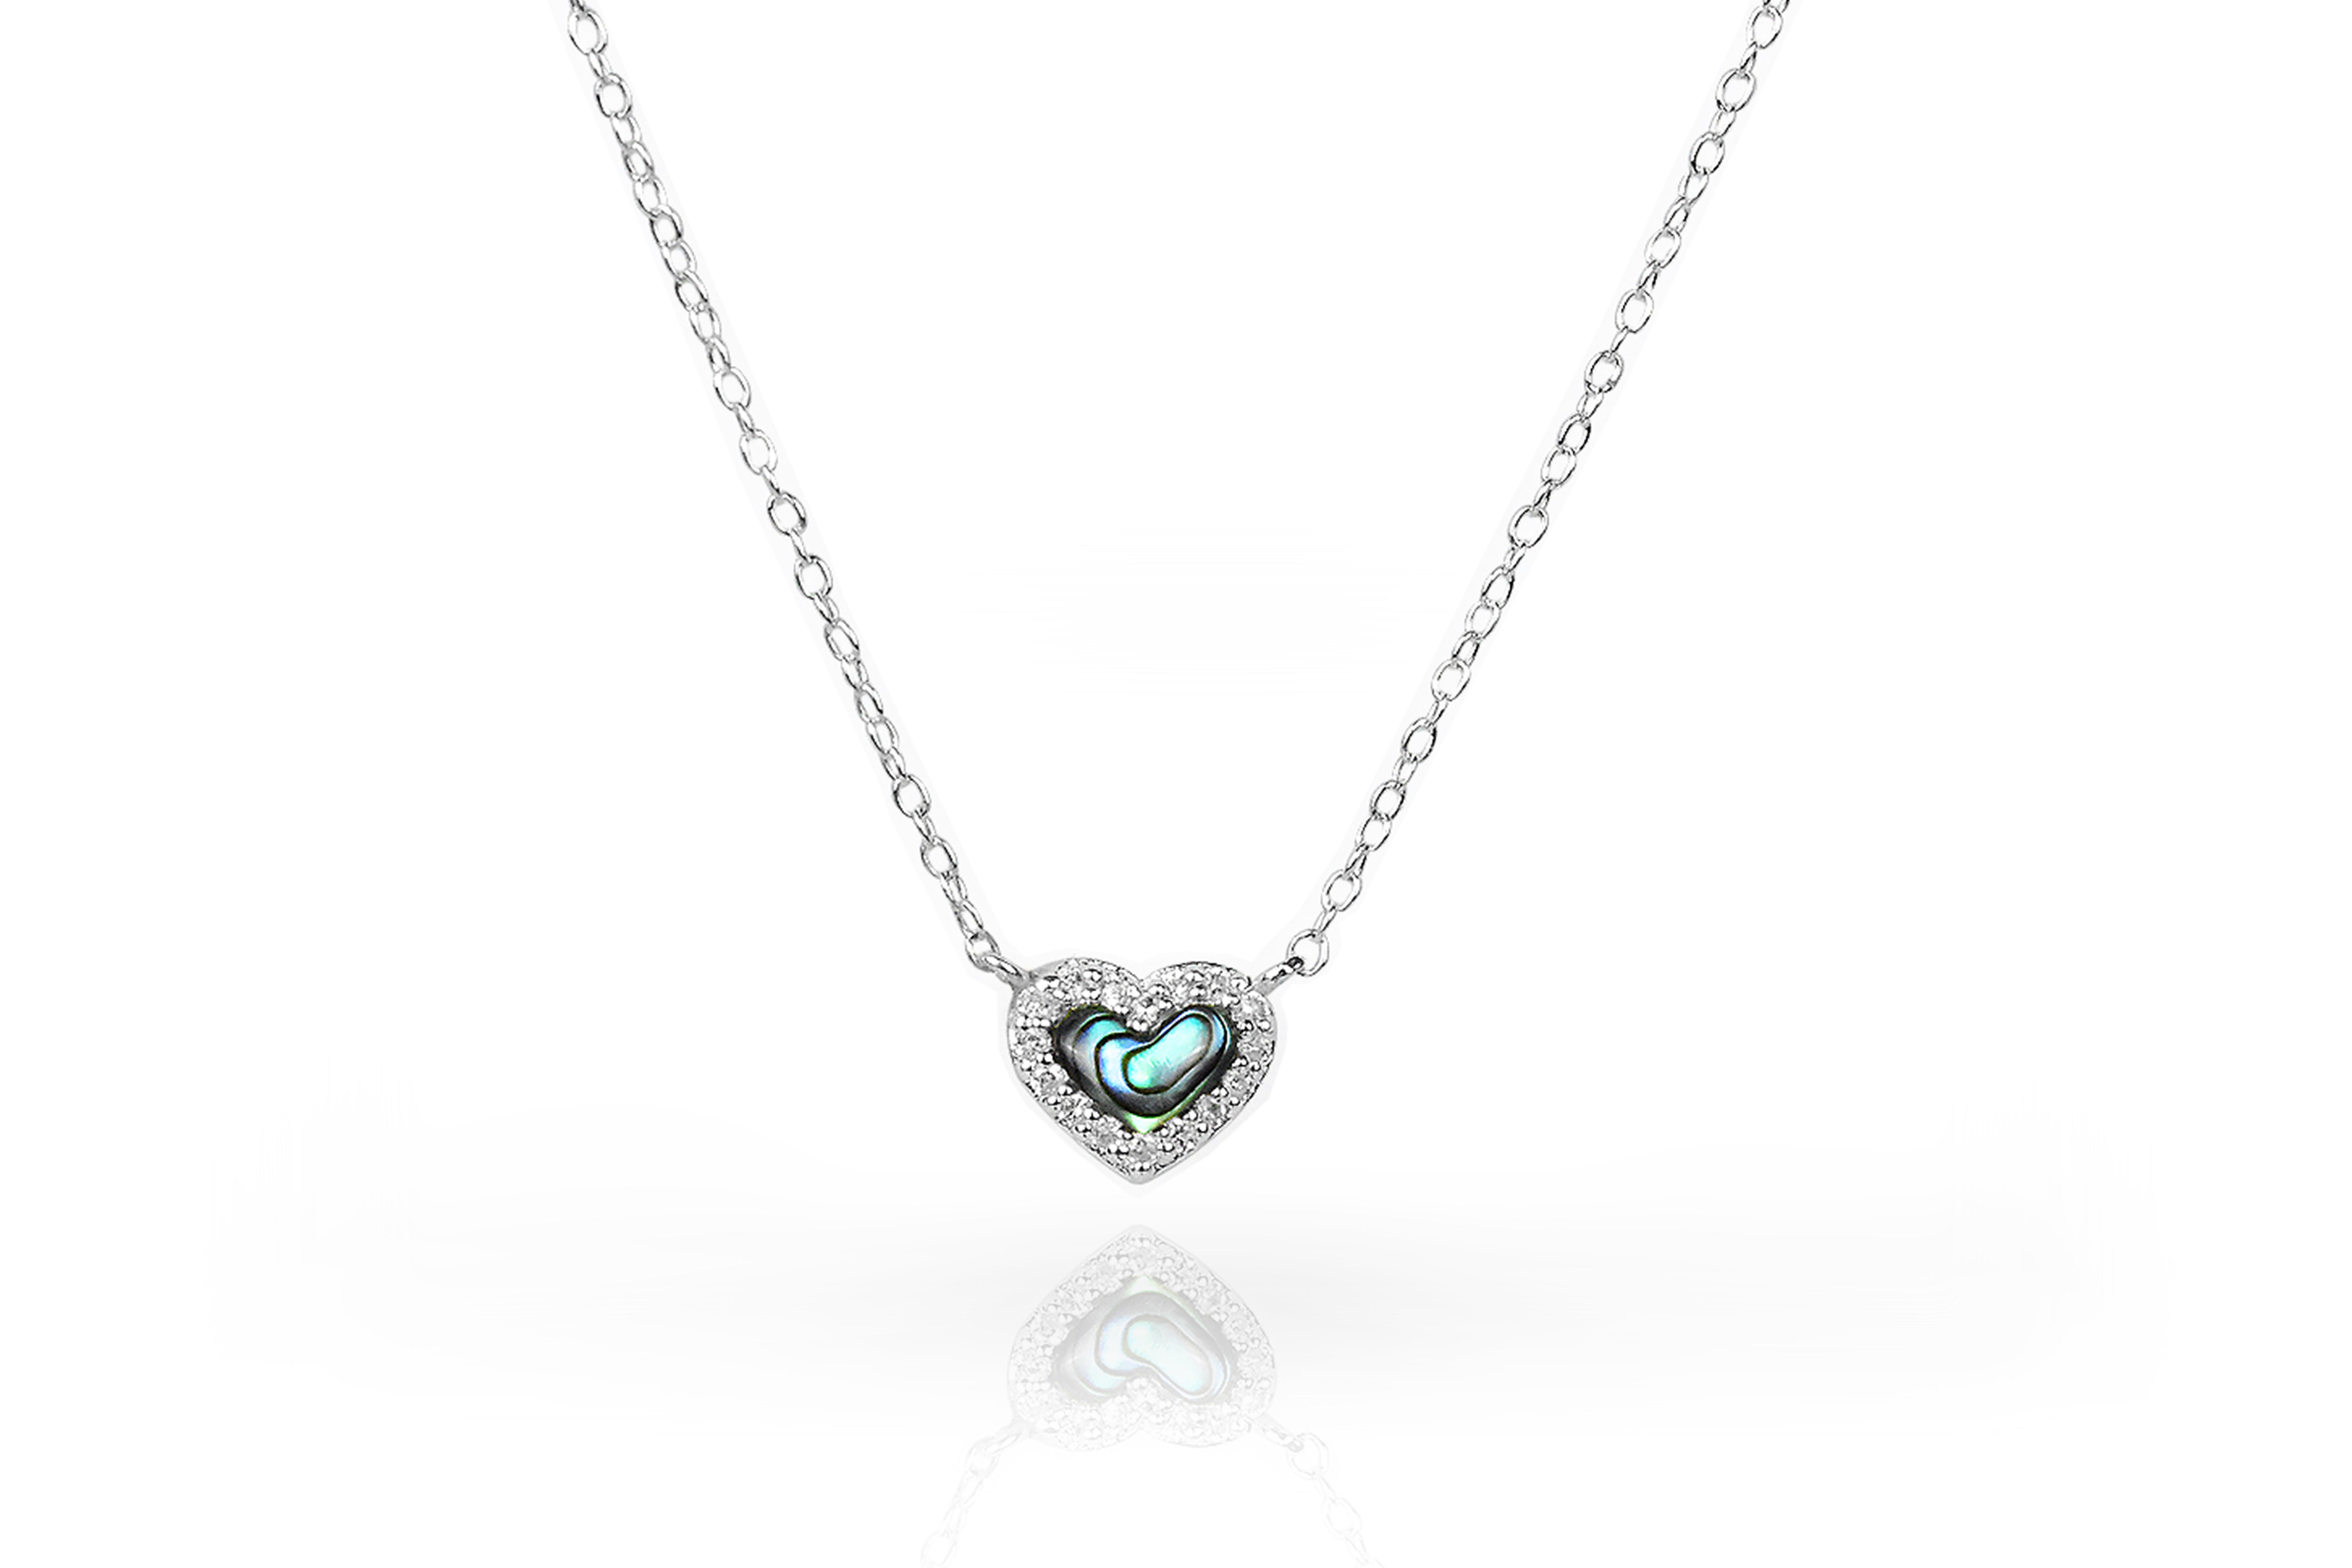 10k Gold Gemstone Heart Necklace, Gemstone Options For Sale